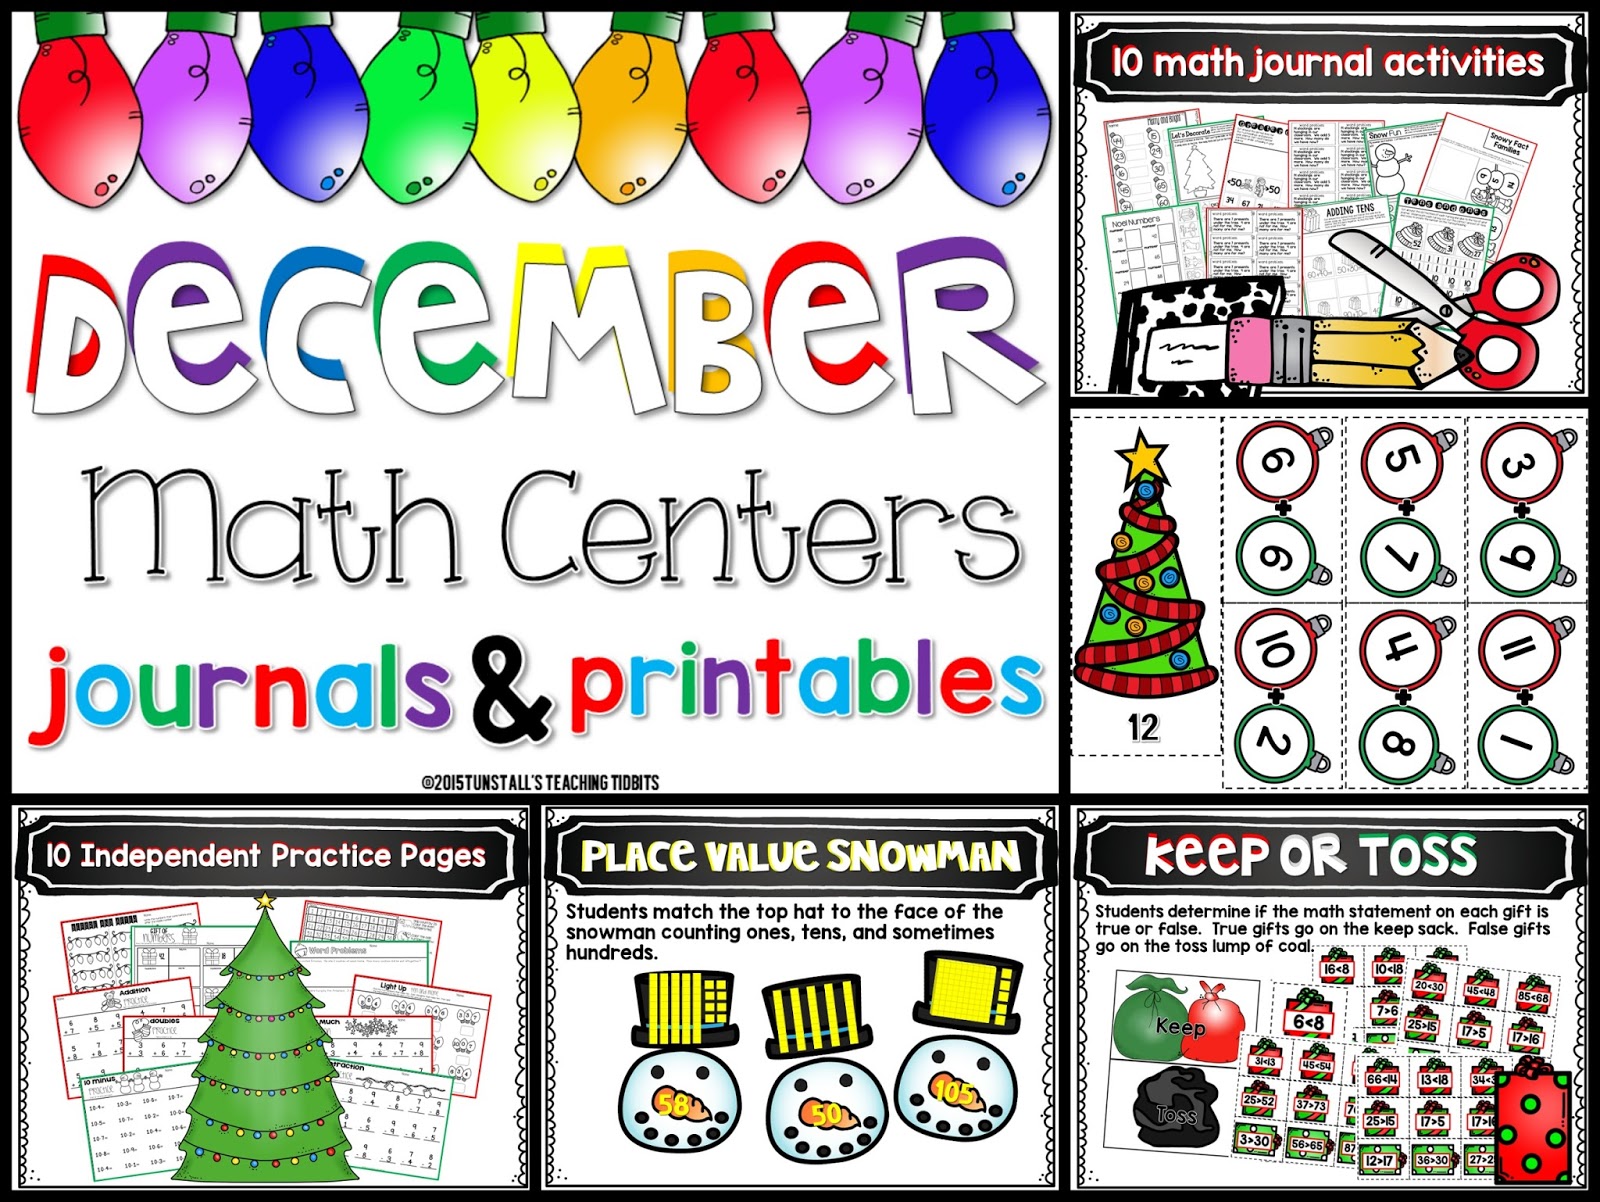 December Math Games, Journals, and Printables